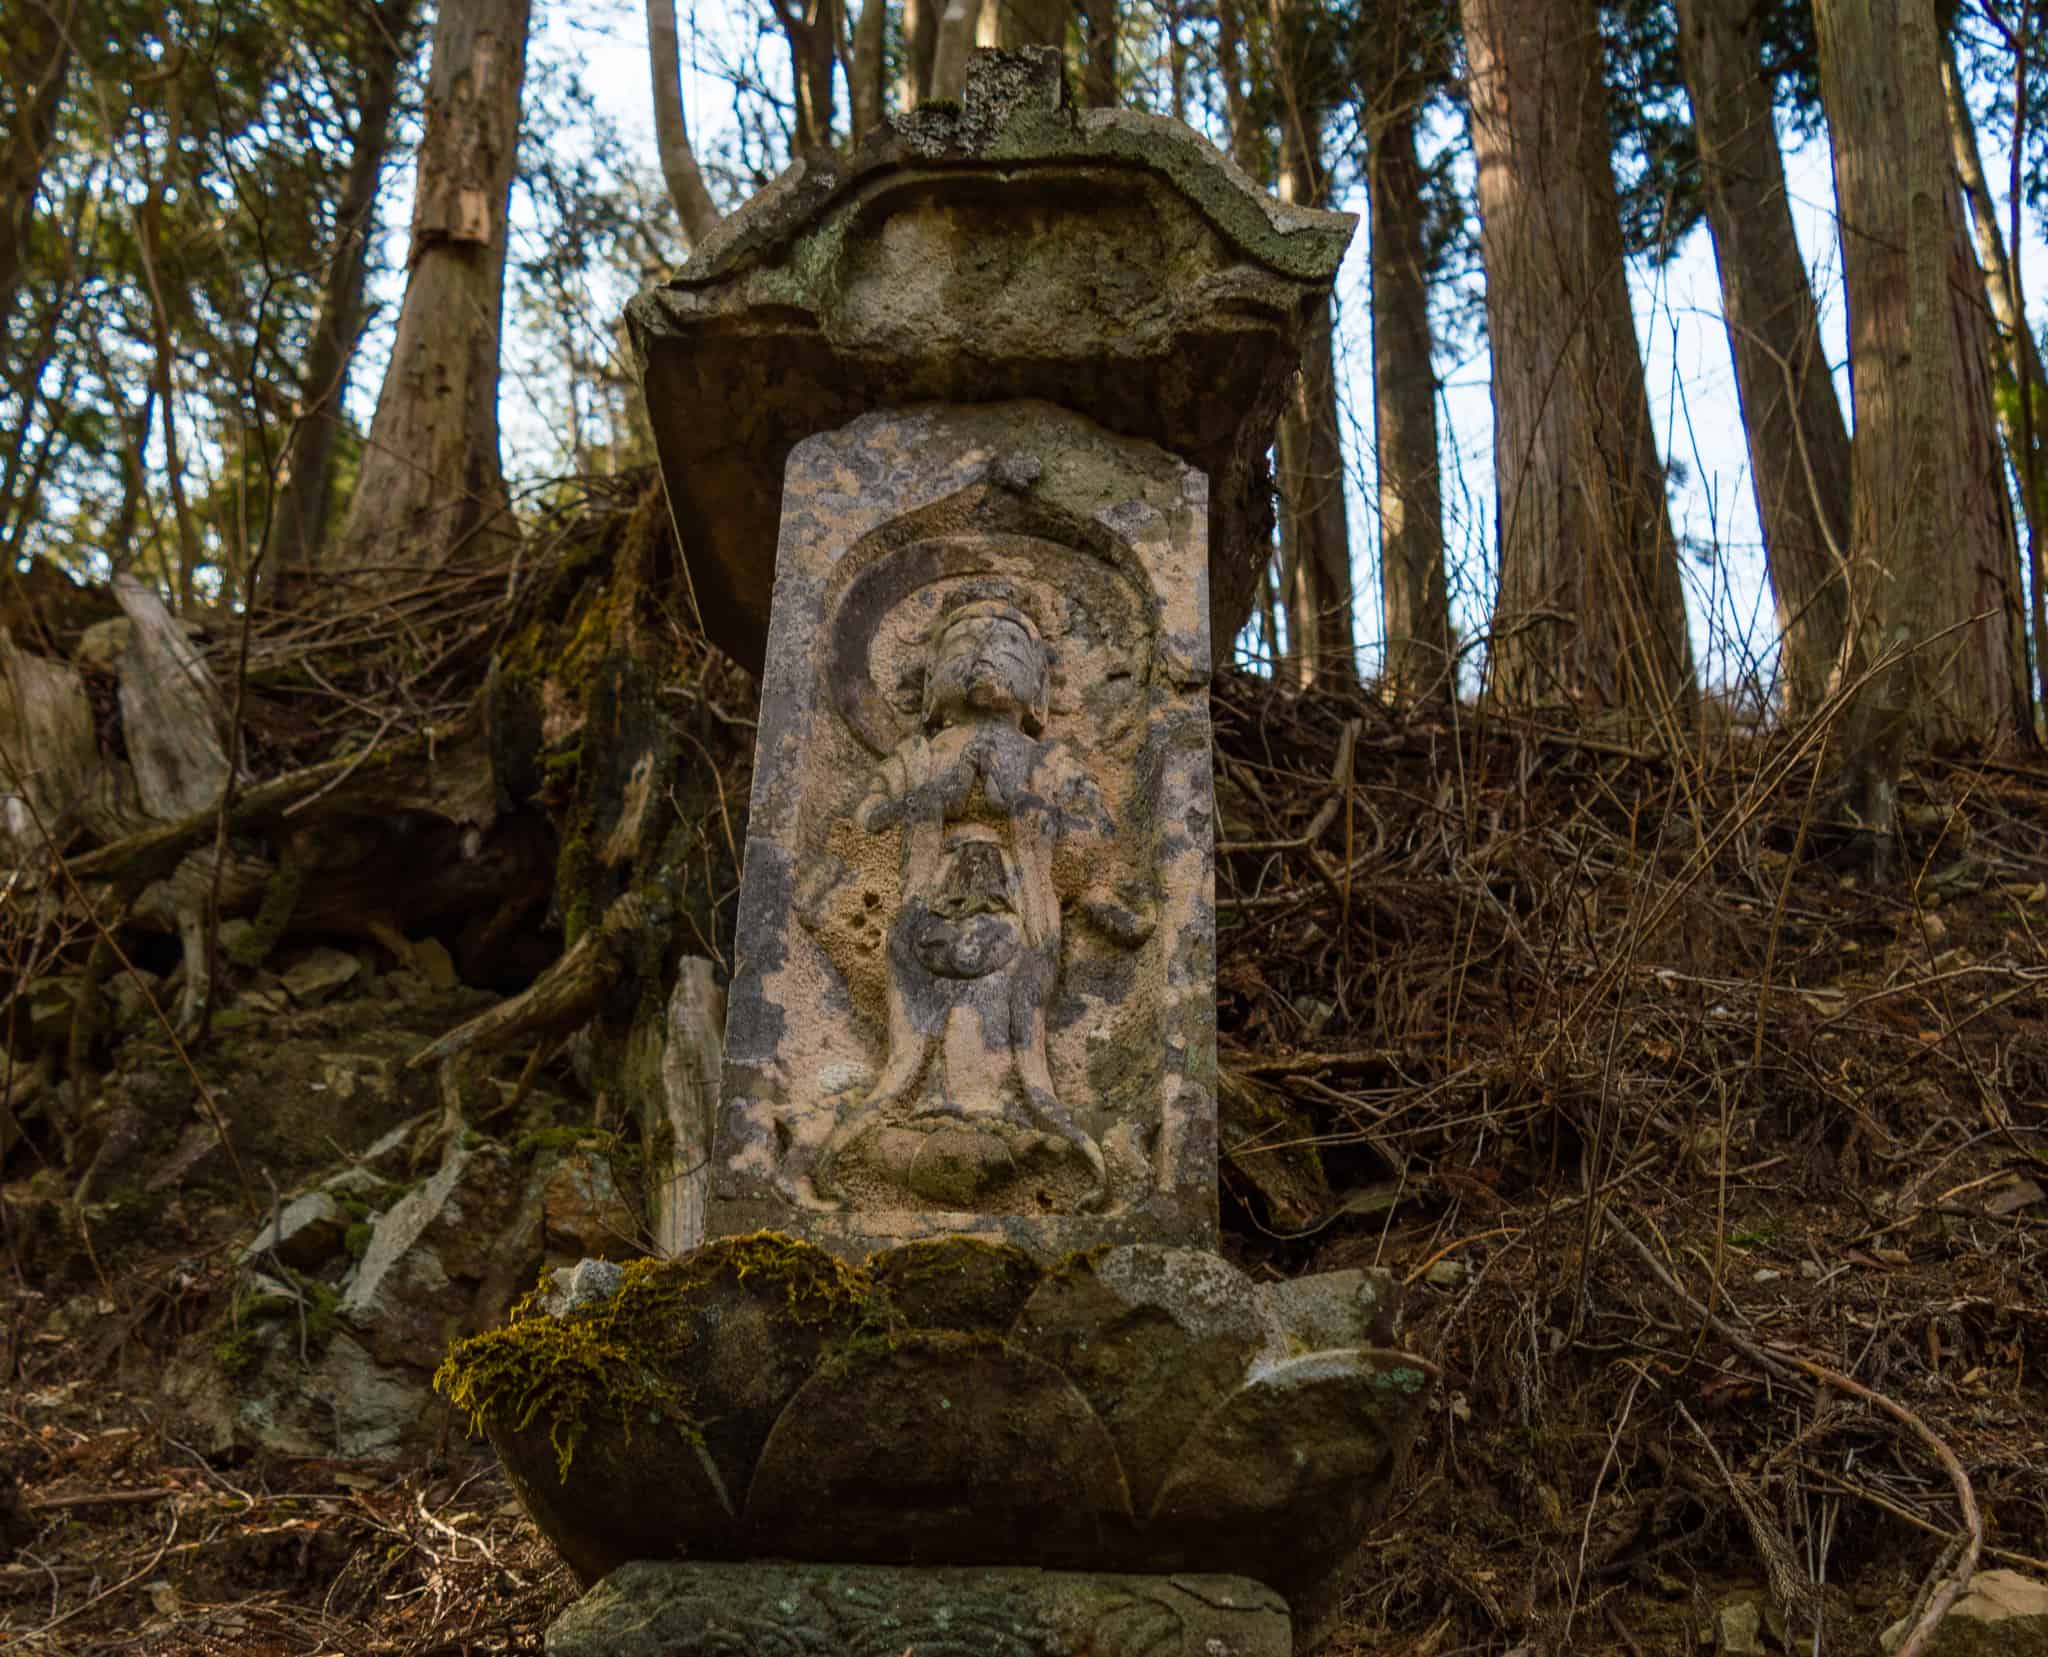 Notice 13 little stone statues along the temple's Pilgrimage Path